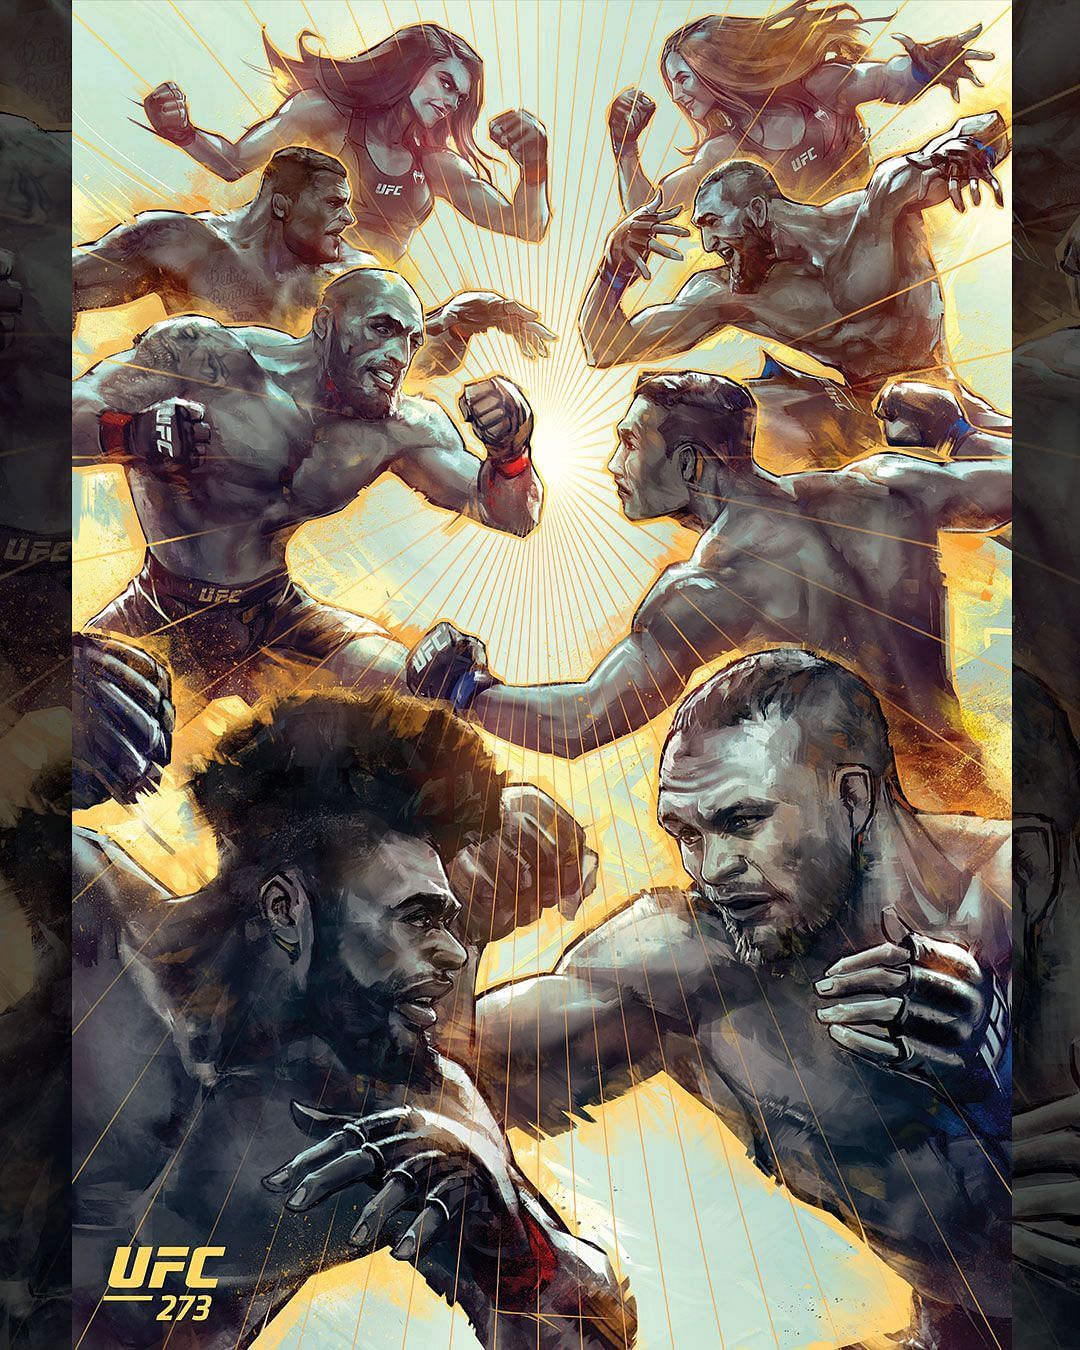 UFC 273 Artist Series poster [Image via @ufc on Twitter]